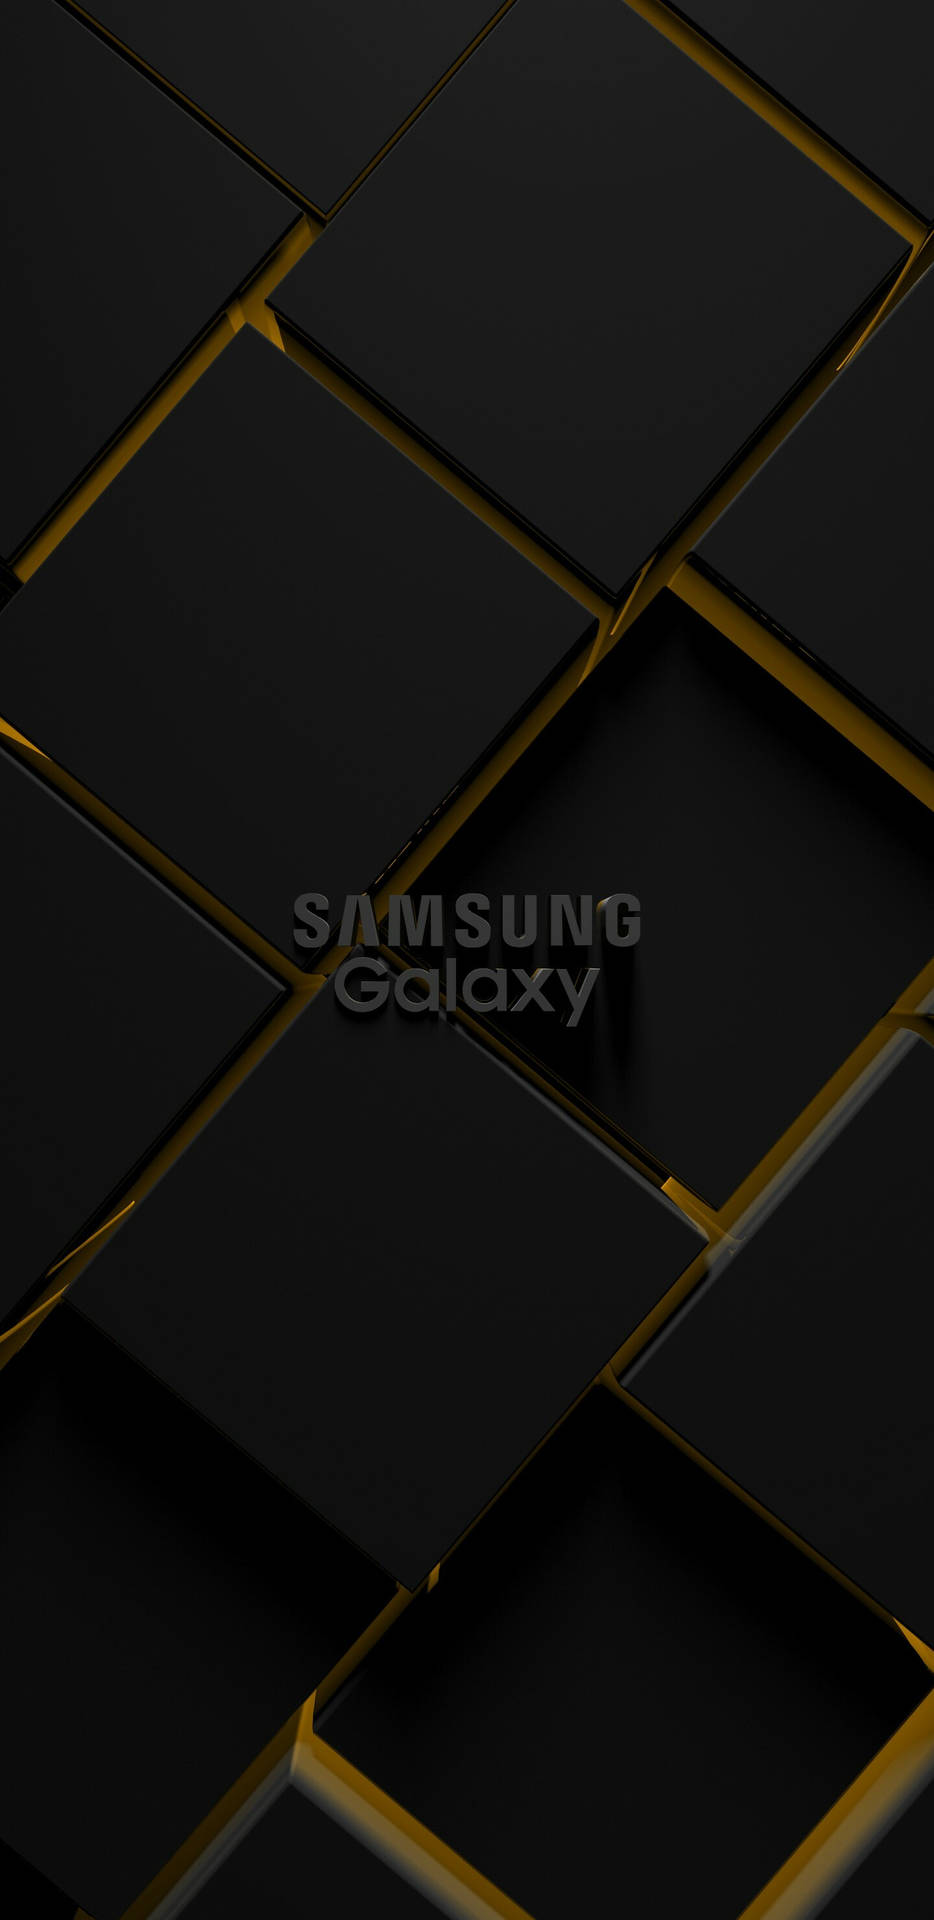 Samsung Galaxy Rhombus Yellow Light Background